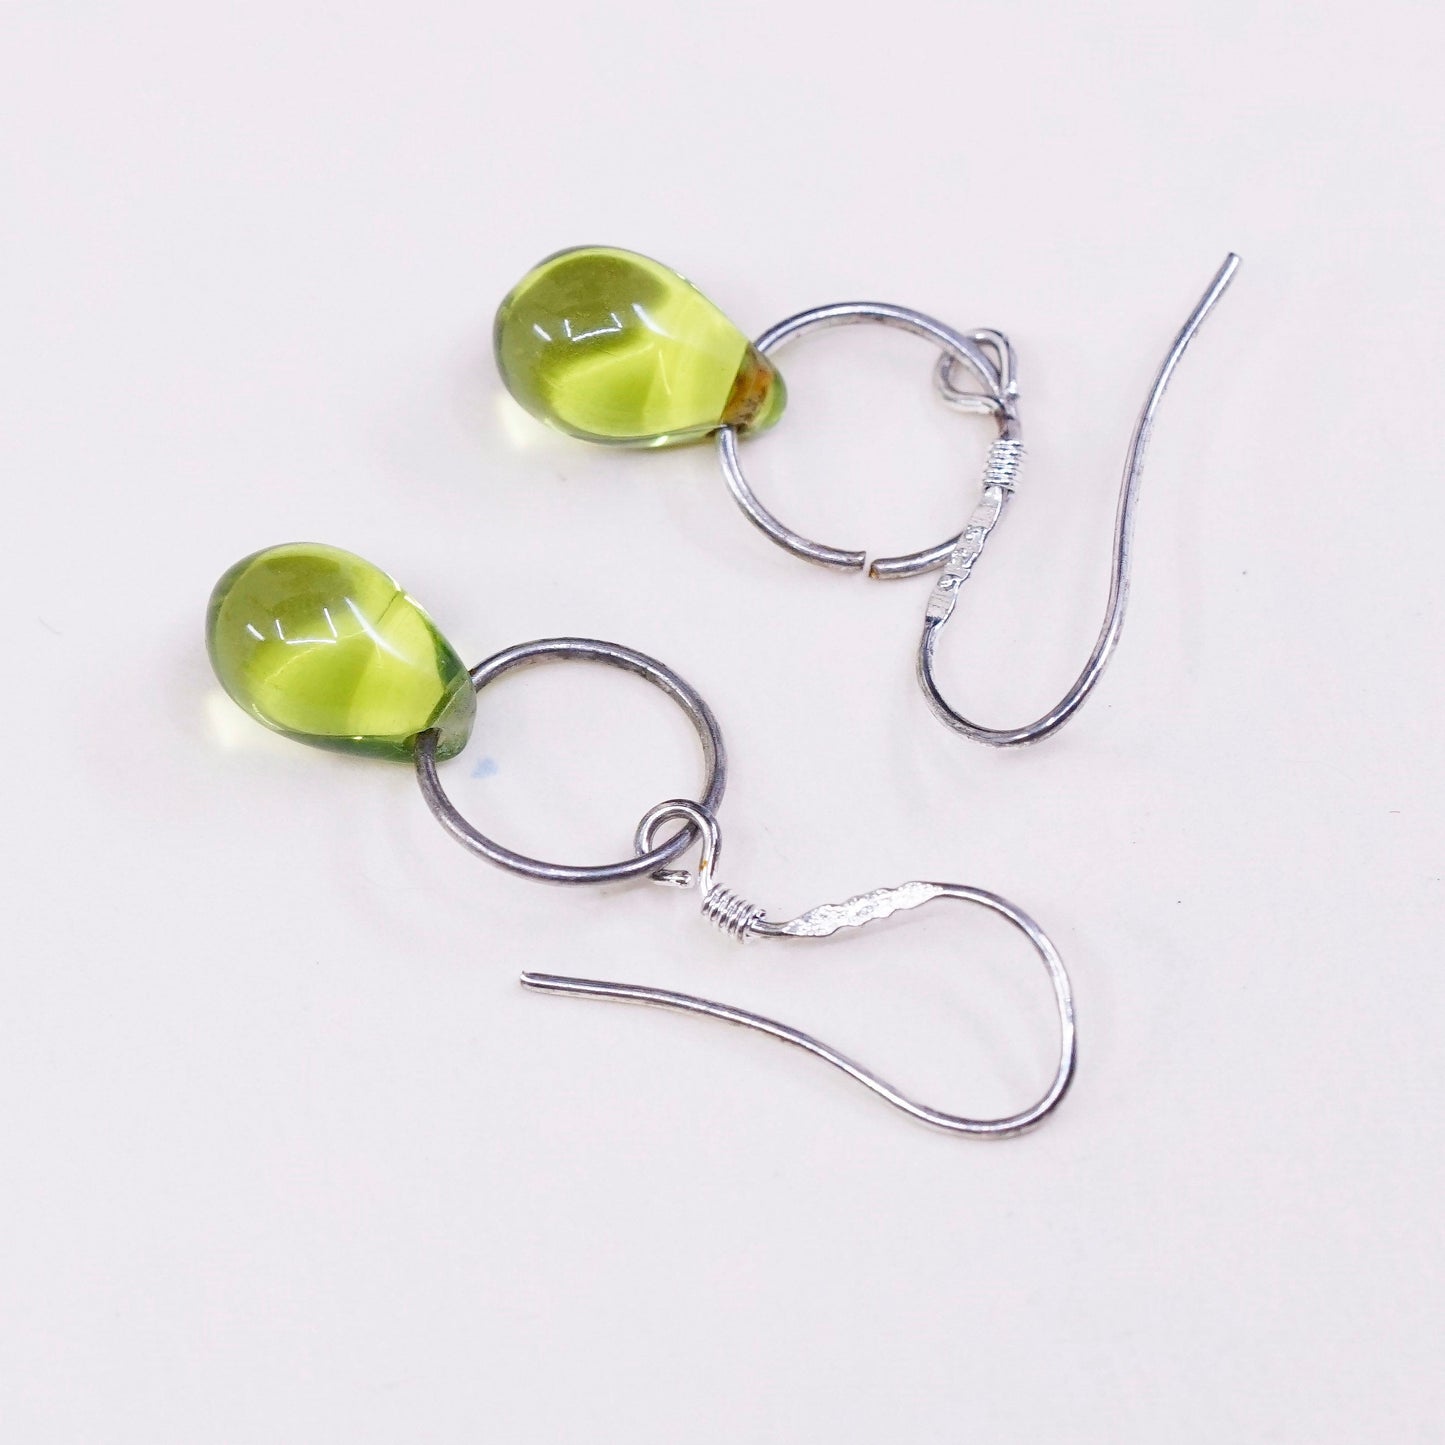 vtg Sterling silver handmade earrings, 925 hooks with green glass teardrop